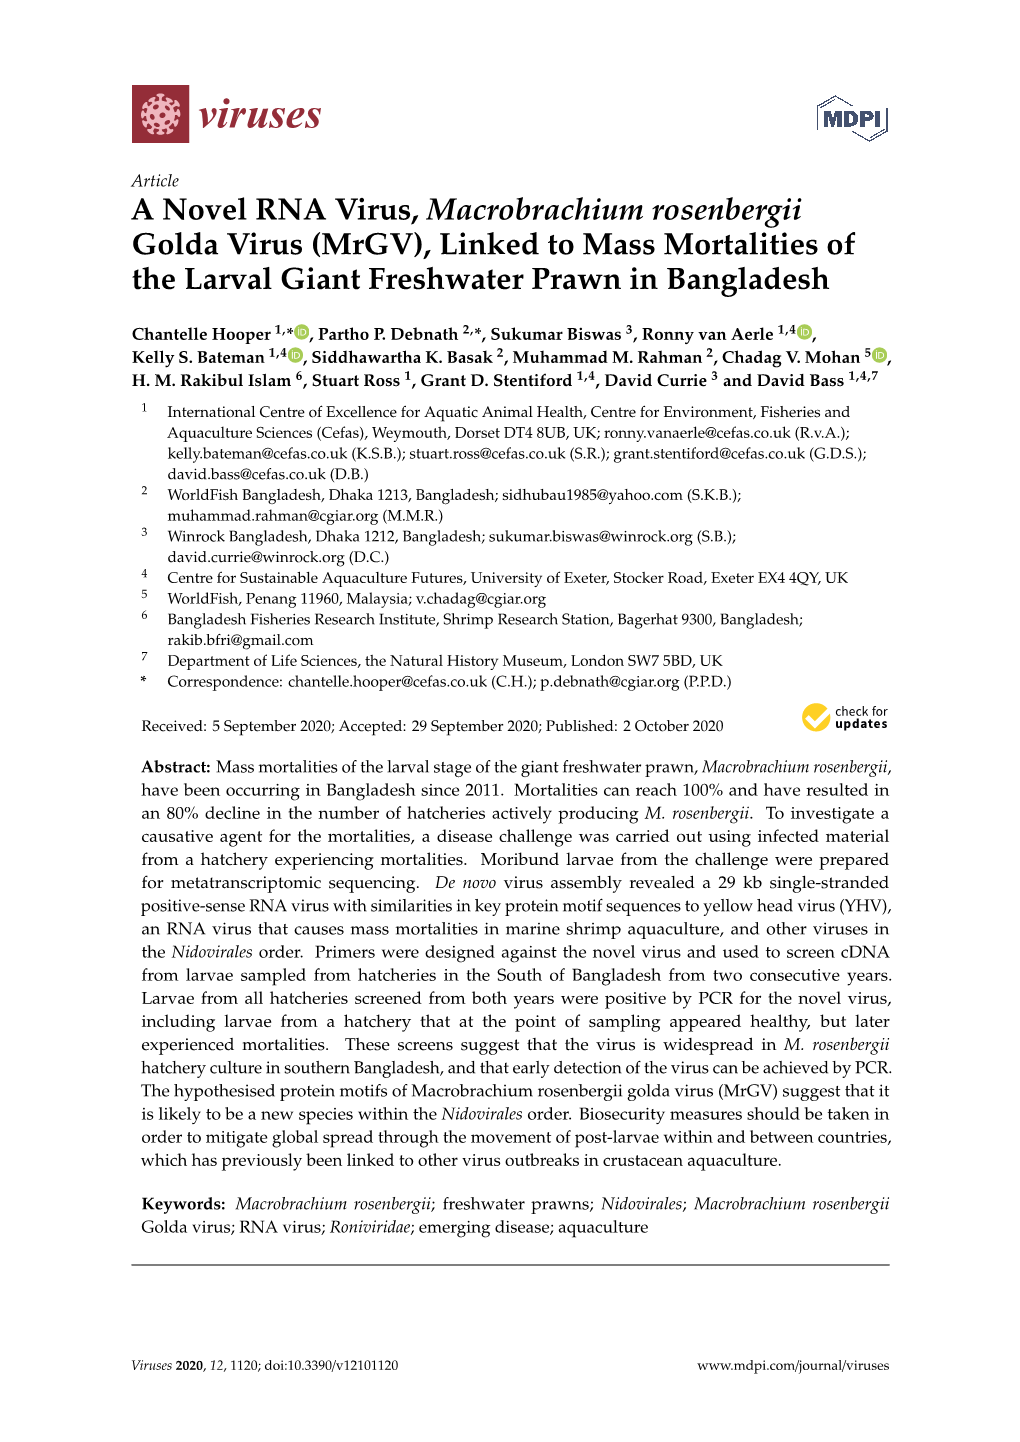 A Novel RNA Virus, Macrobrachium Rosenbergii Golda Virus (Mrgv), Linked to Mass Mortalities of the Larval Giant Freshwater Prawn in Bangladesh